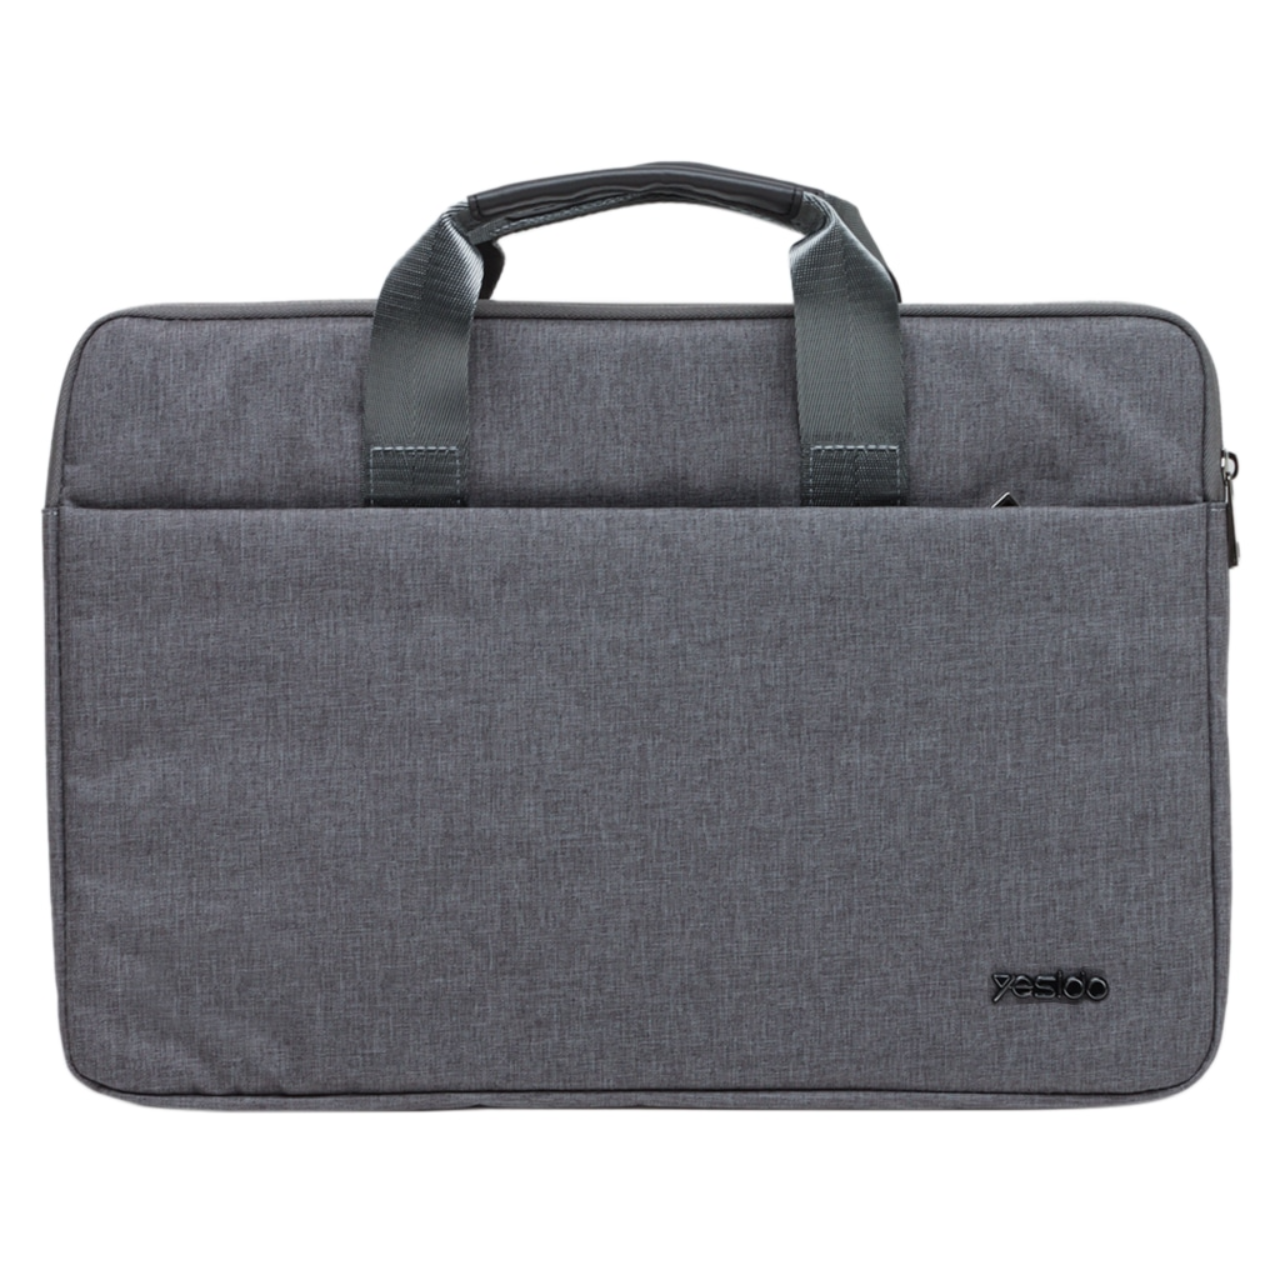 Yesido WB37 14 inch laptop bag